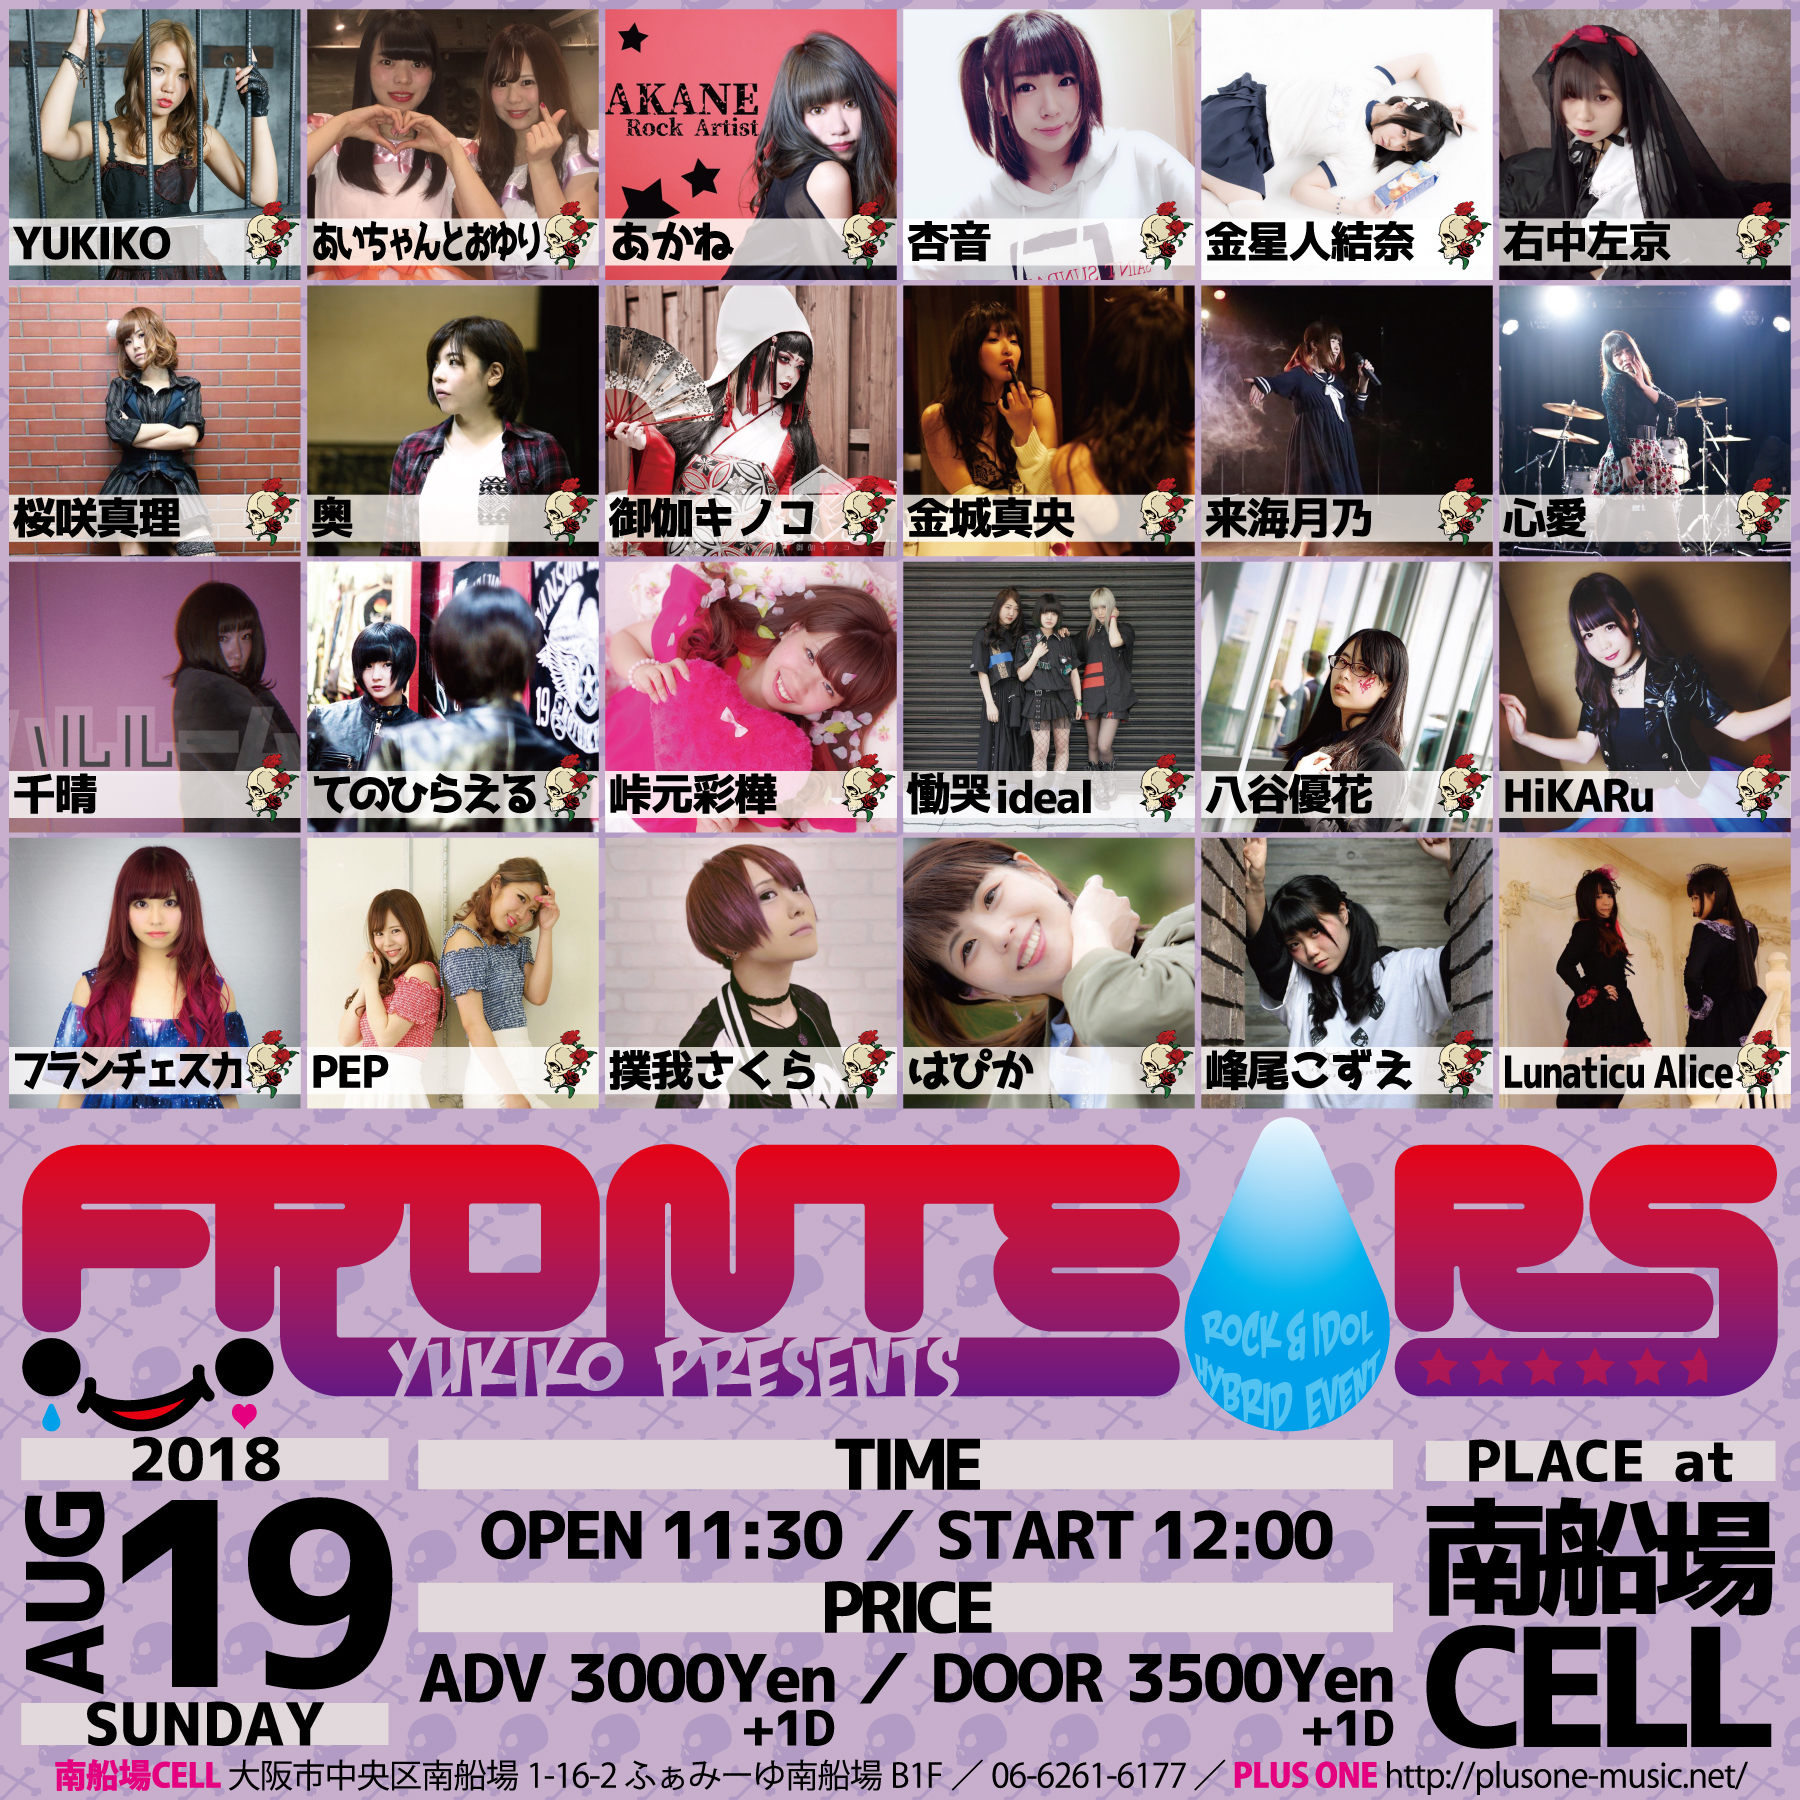 YUKIKO presents "FRONTEARS #10"